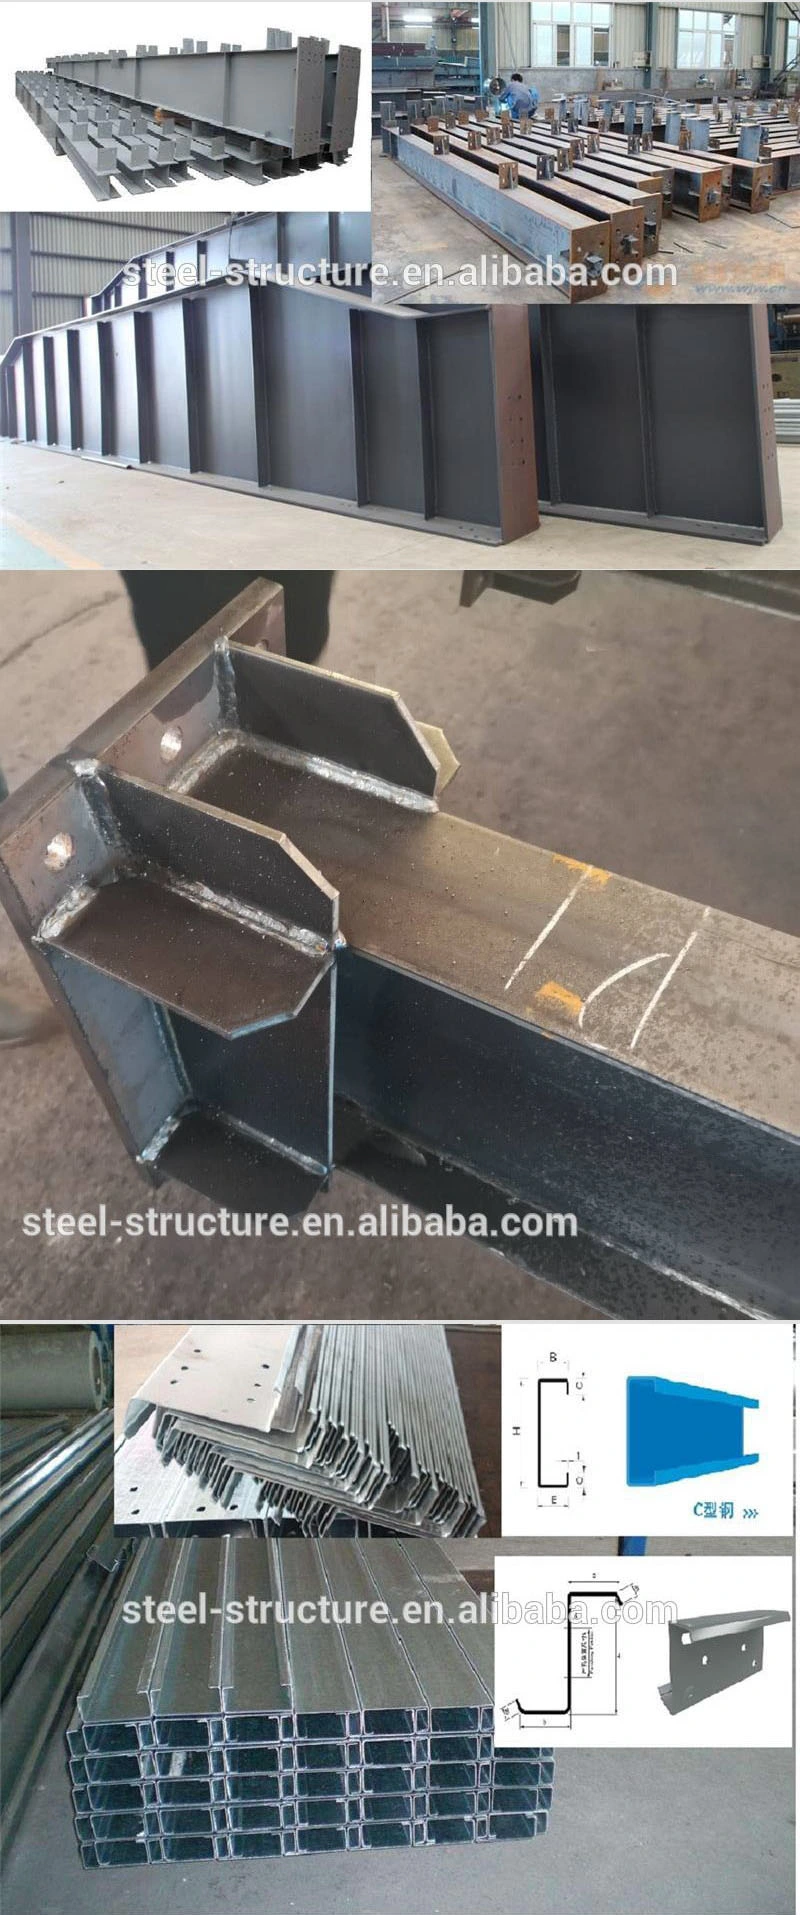 Australia /New Zealand Standard AS/NZS 1554 Steel Framing Lateral Bracing Bar